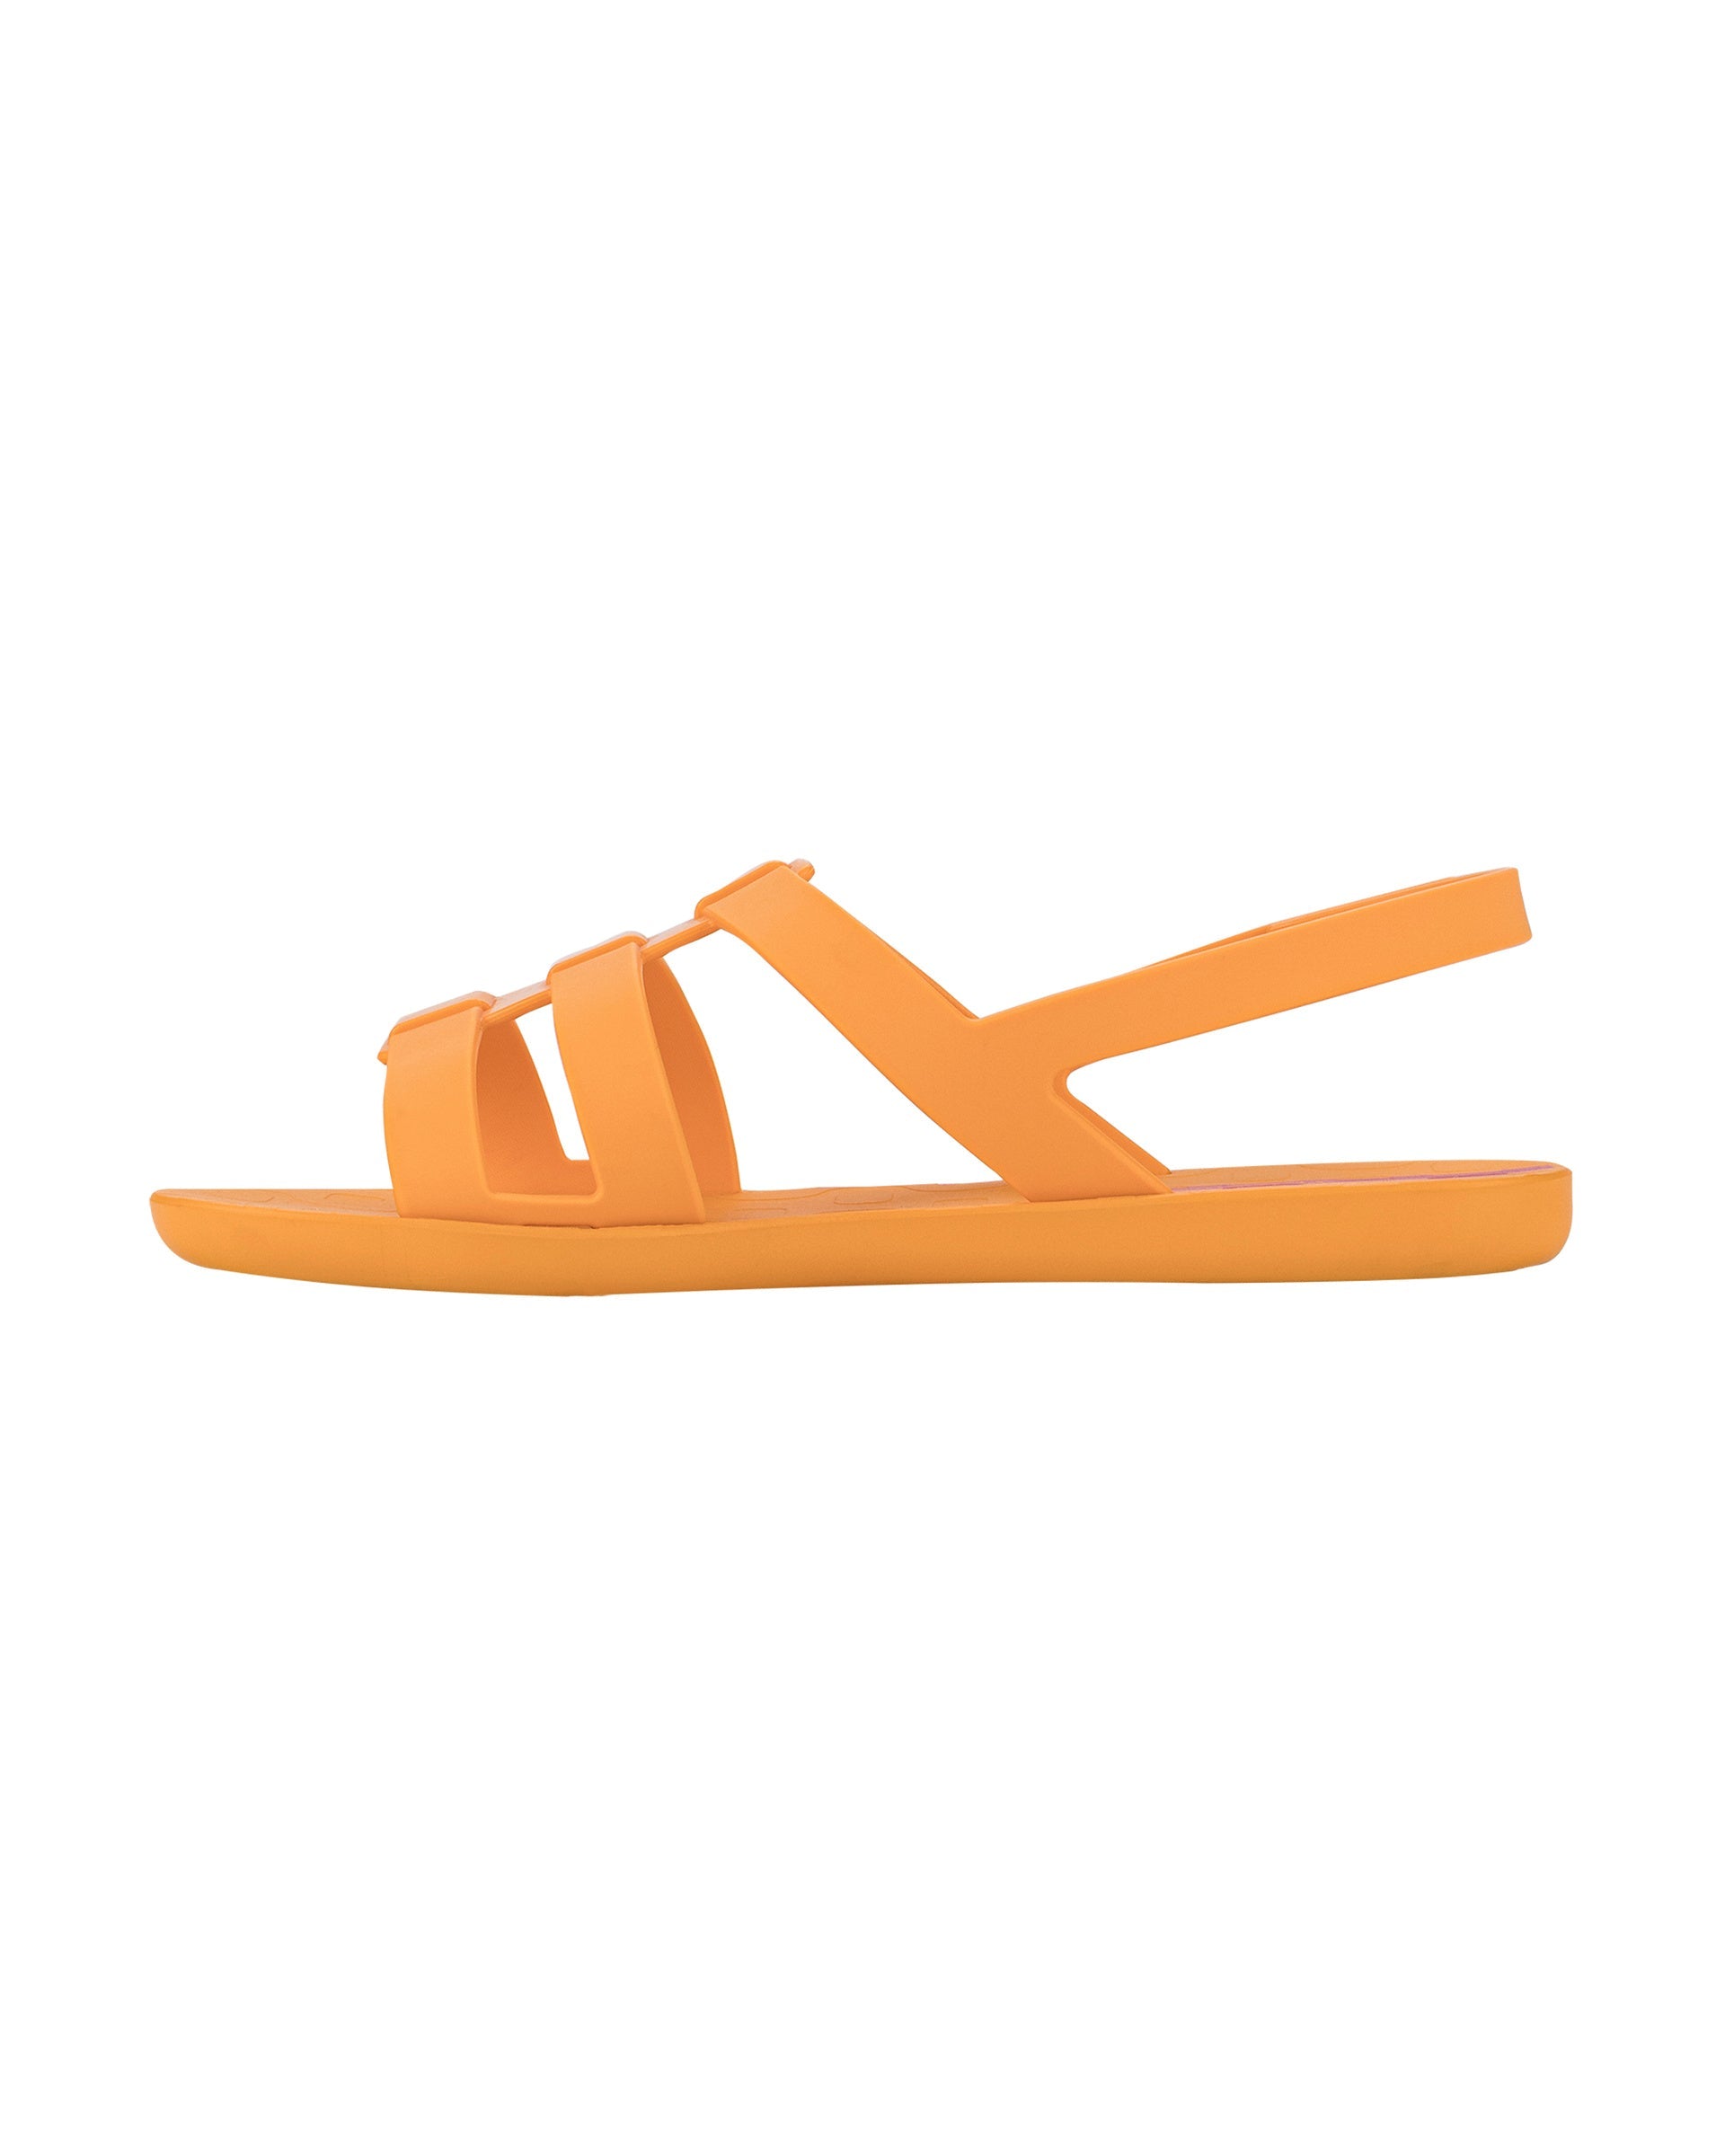 Inner side view of a orange Ipanema Style women's sandal.